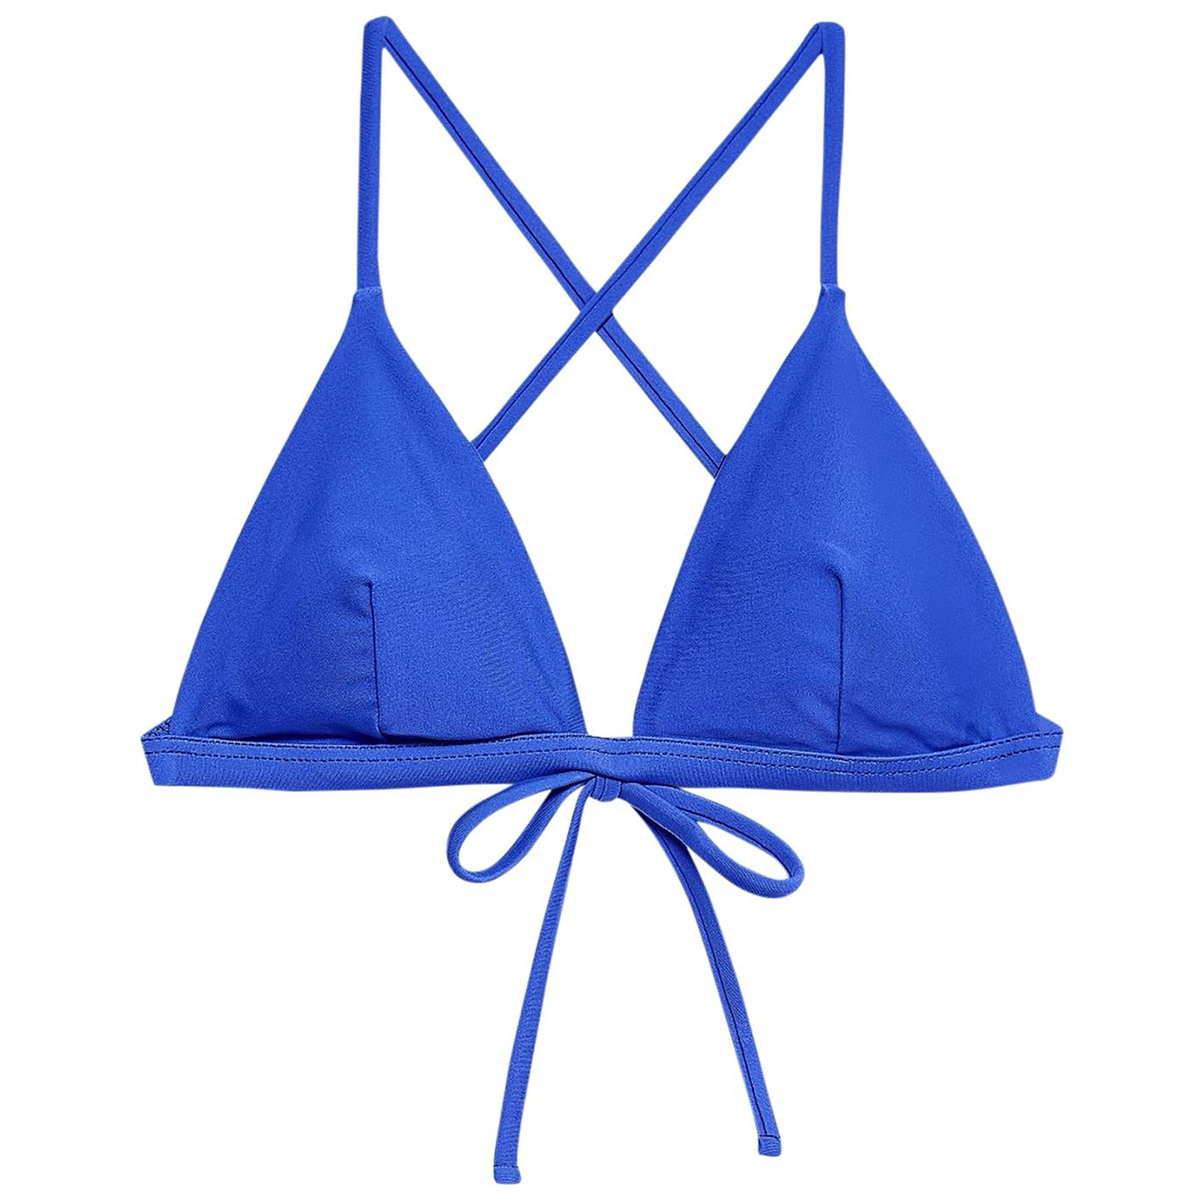 Jack Wills Women's Ambrase Triangle Bikini Top - Blue, 2